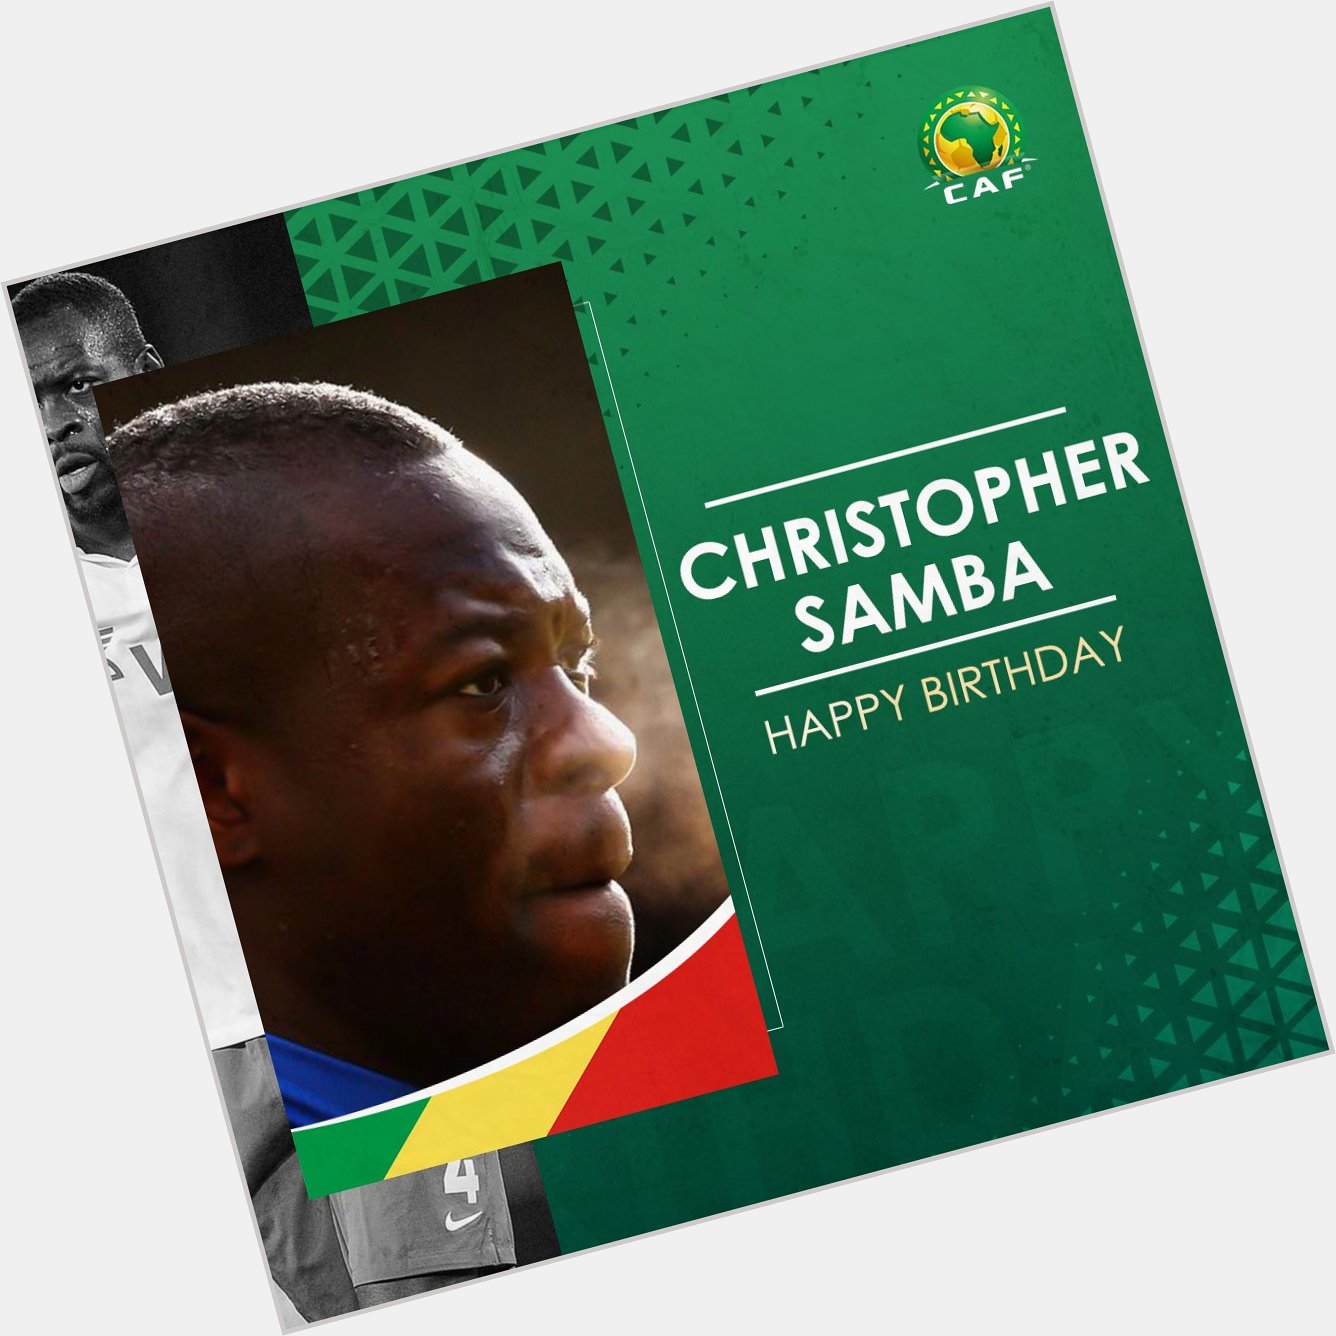   Happy Birthday to Congolese defender Christopher Samba! 